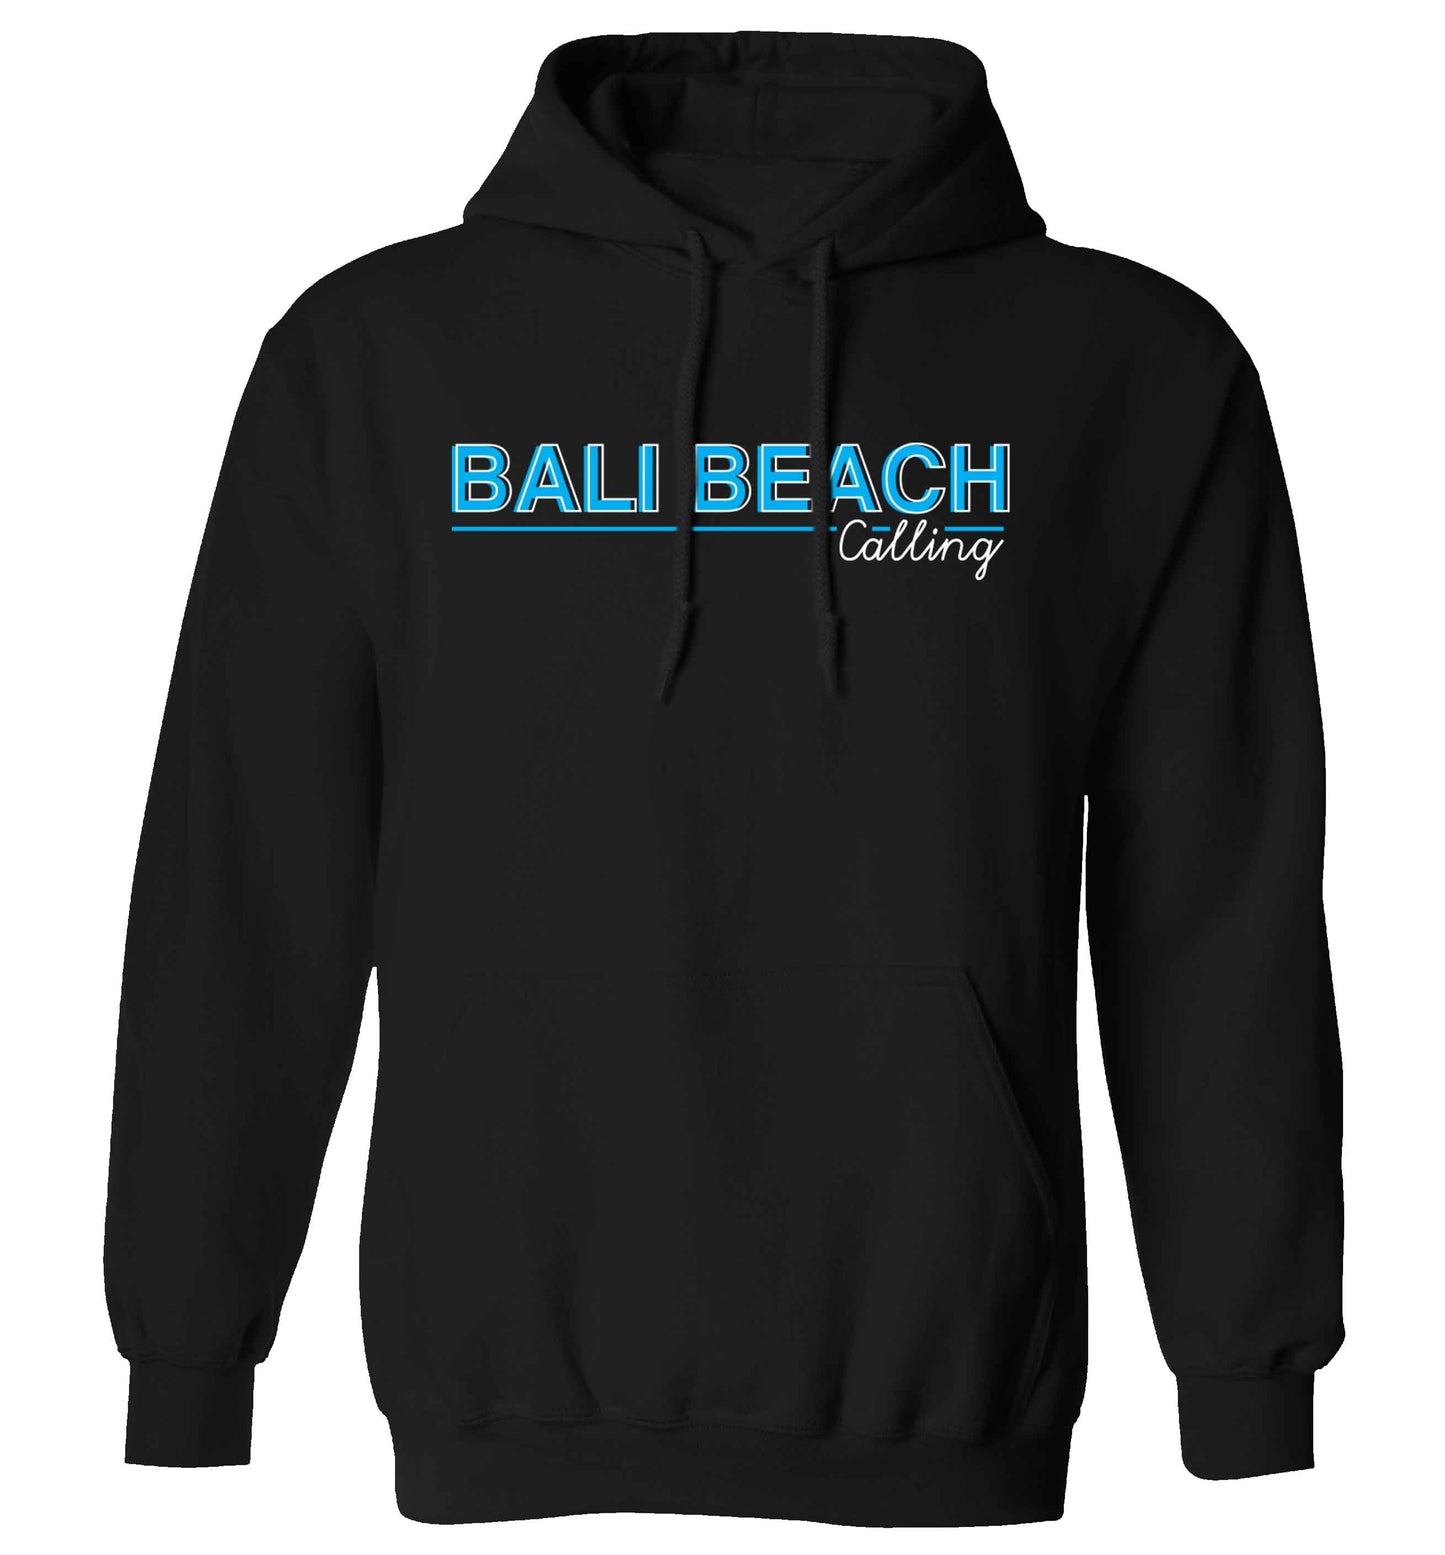 Bali beach calling adults unisex black hoodie 2XL